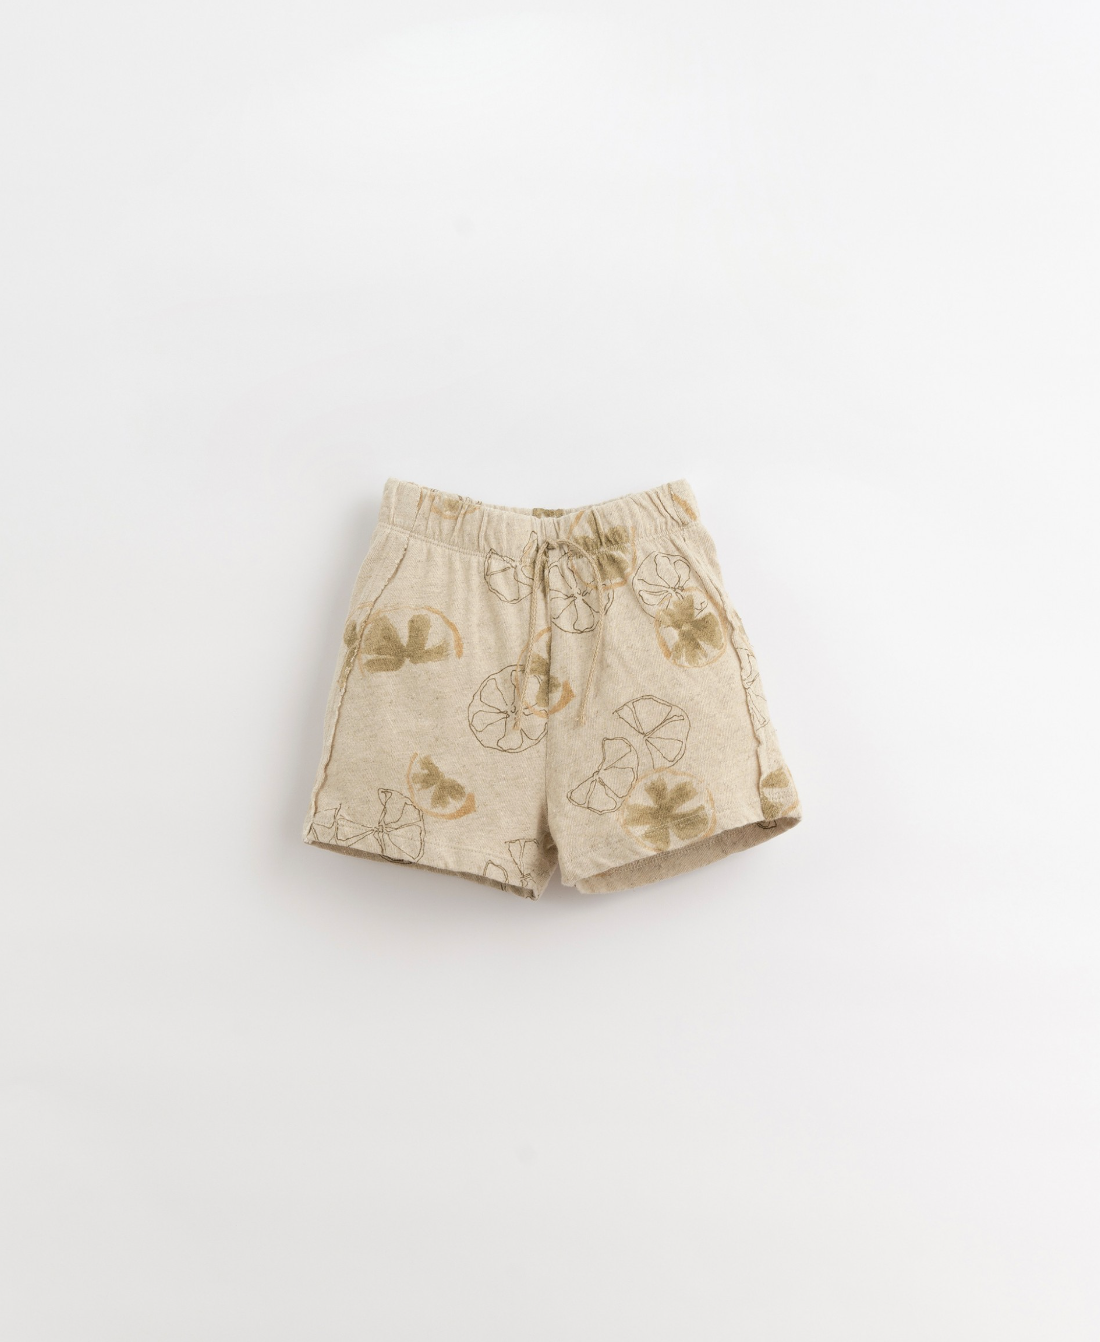 Jersey stitch shorts with citrus print